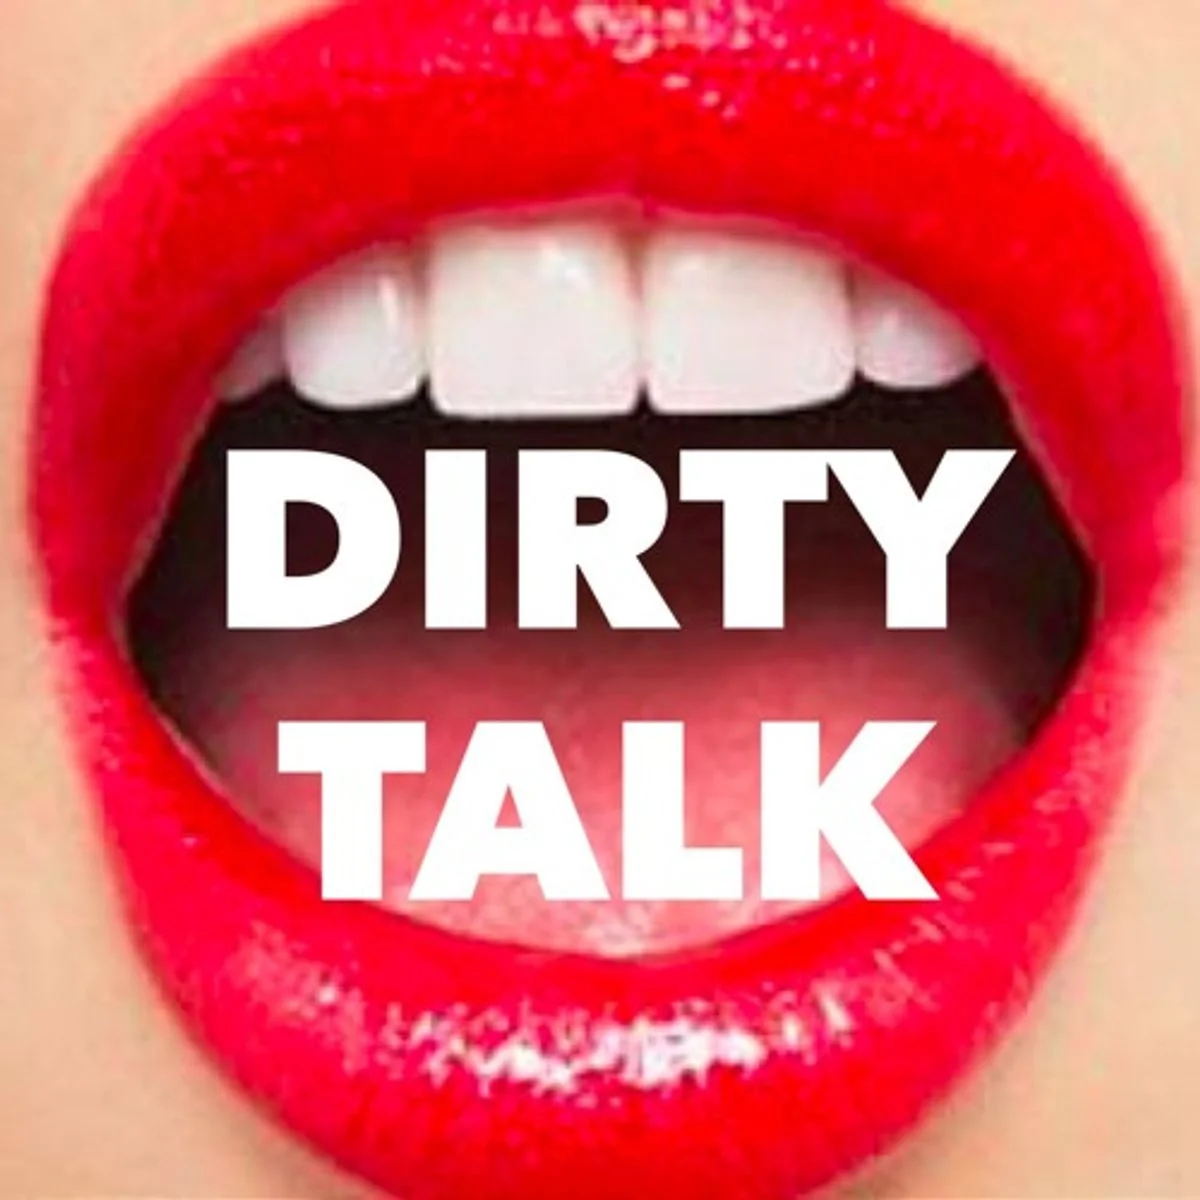 Dirty talk live